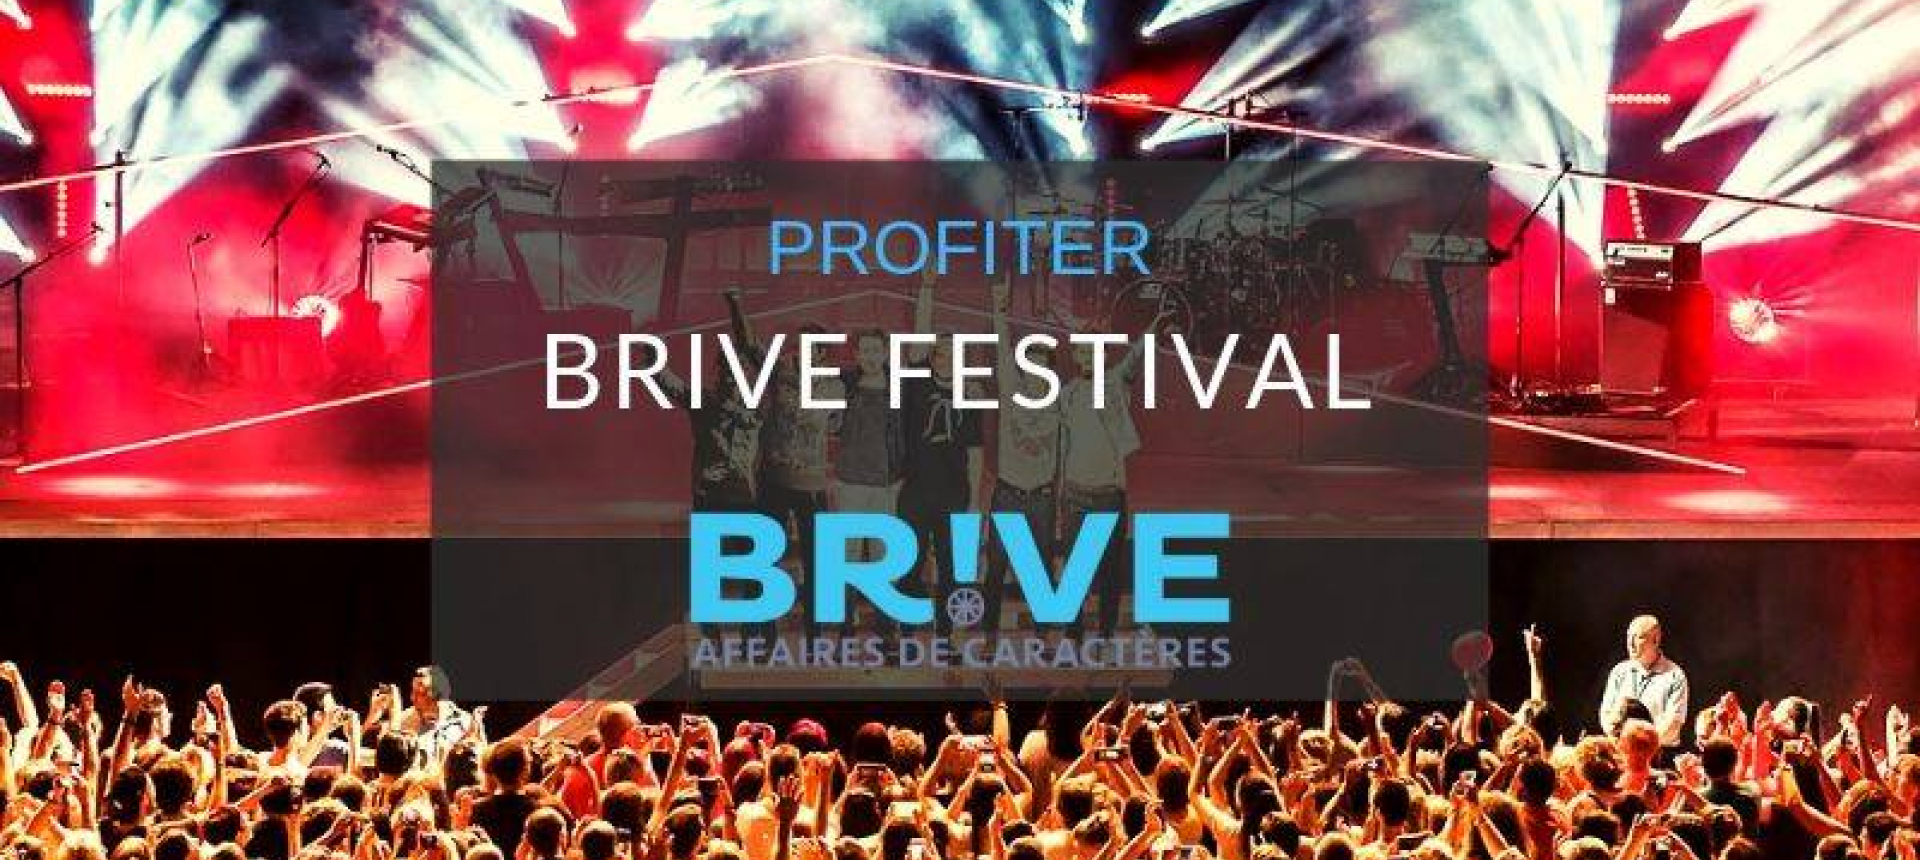 Profiter Brive Festival